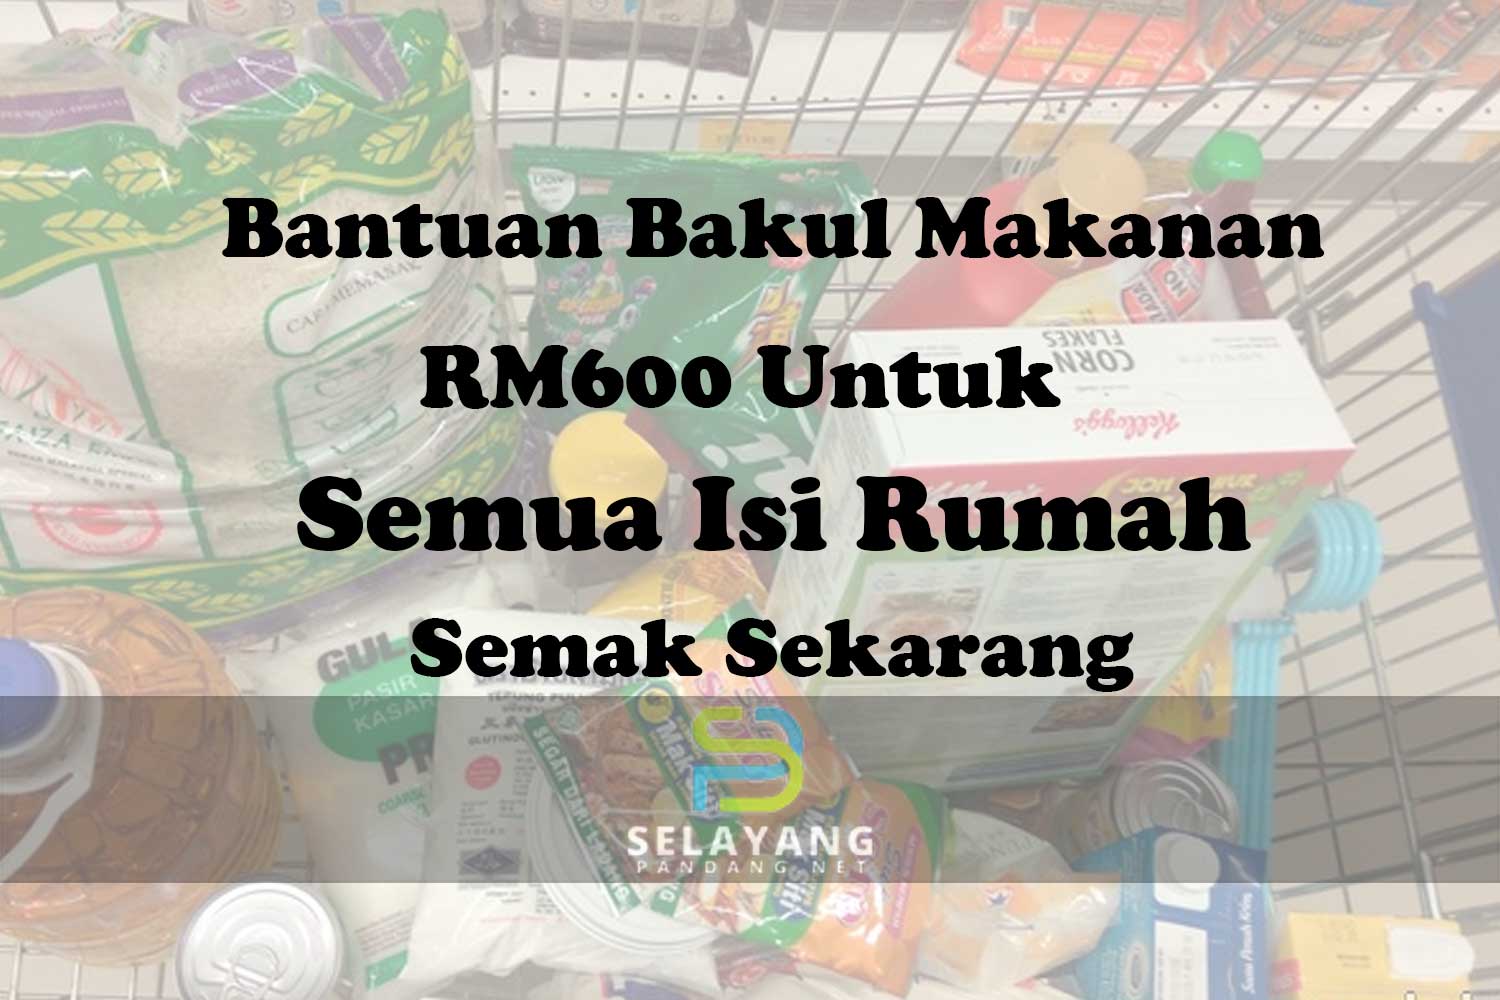 Bantuan bakul makanan RM600 untuk semua isi rumah, semak sekarang!